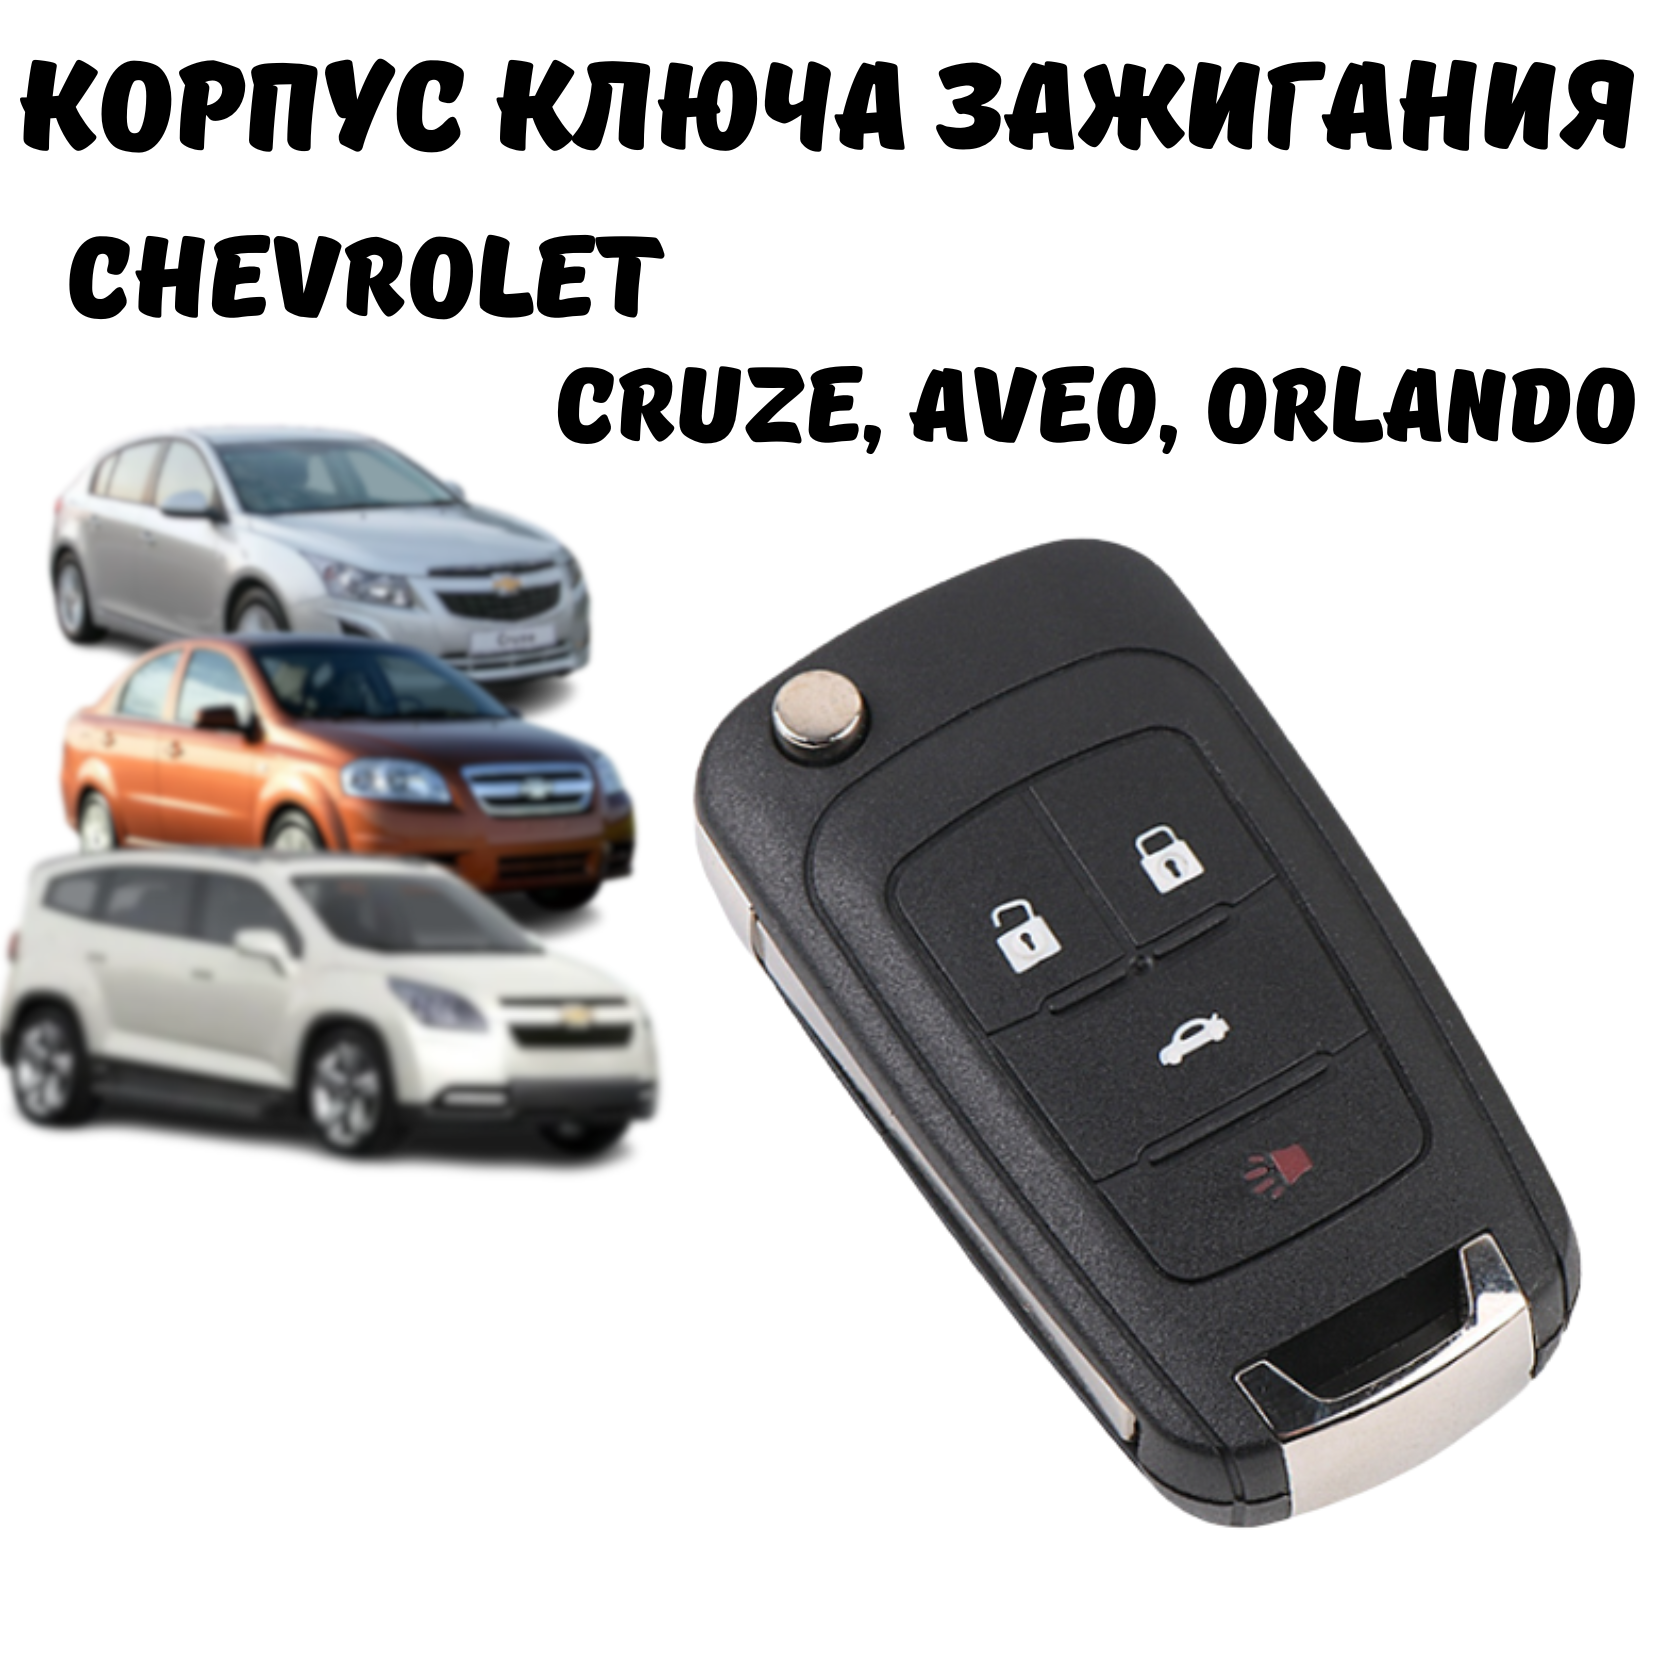 Корпус ключа зажигания Chevrolet Cruze, Aveo, Orlando, 4 кнопки